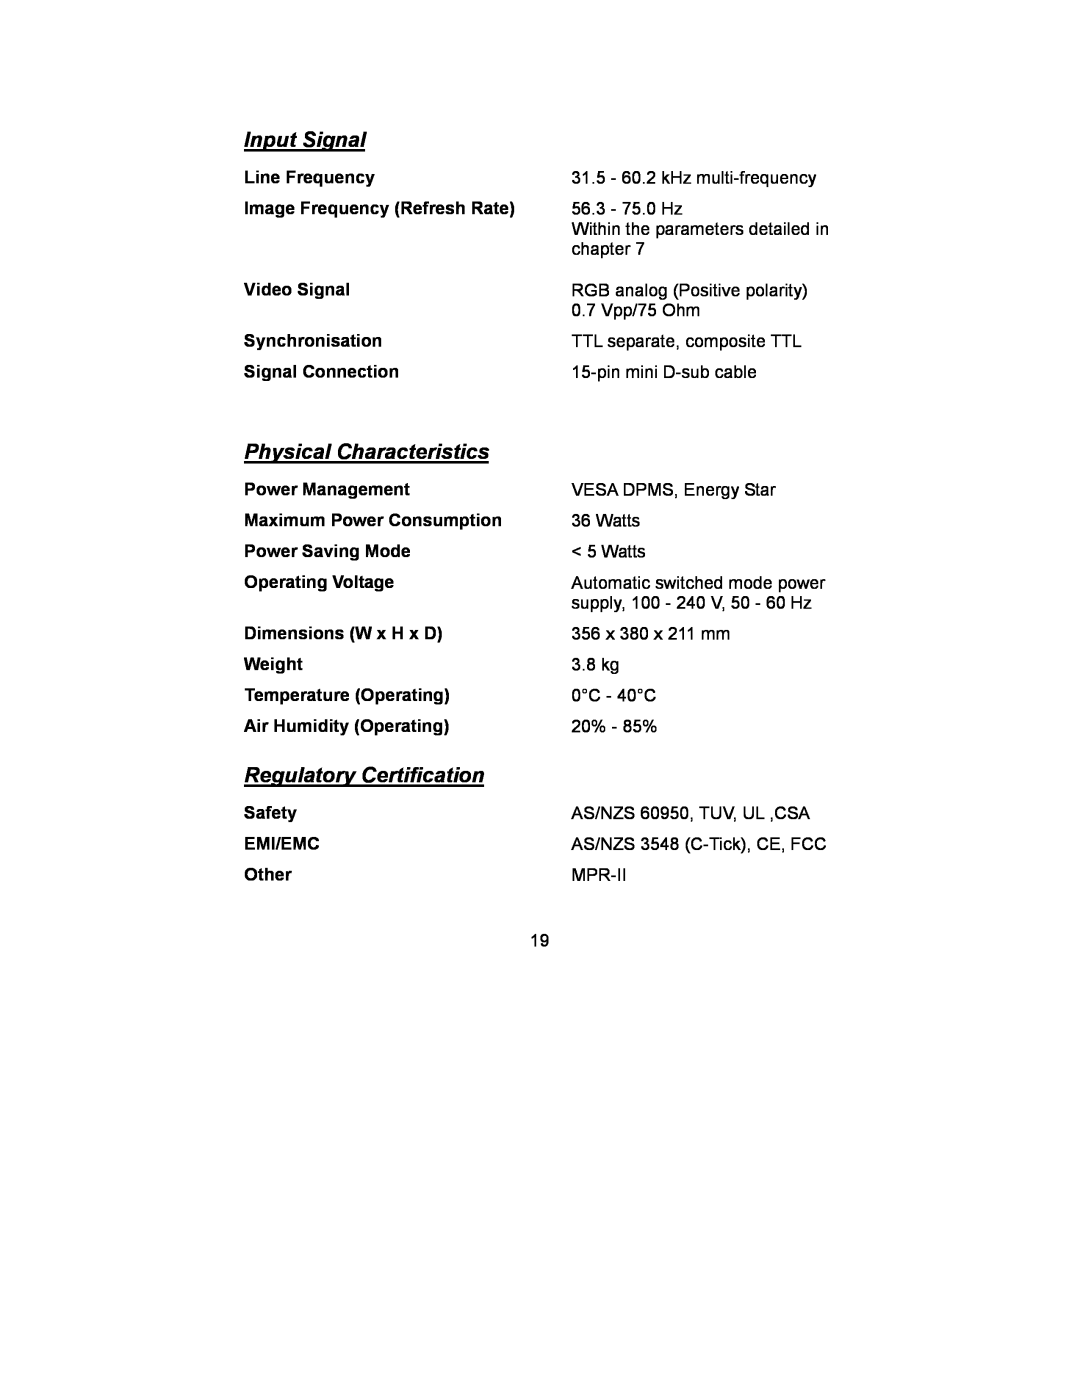 Mitsubishi Electronics DV158 manual Input Signal, Physical Characteristics, Regulatory Certification 